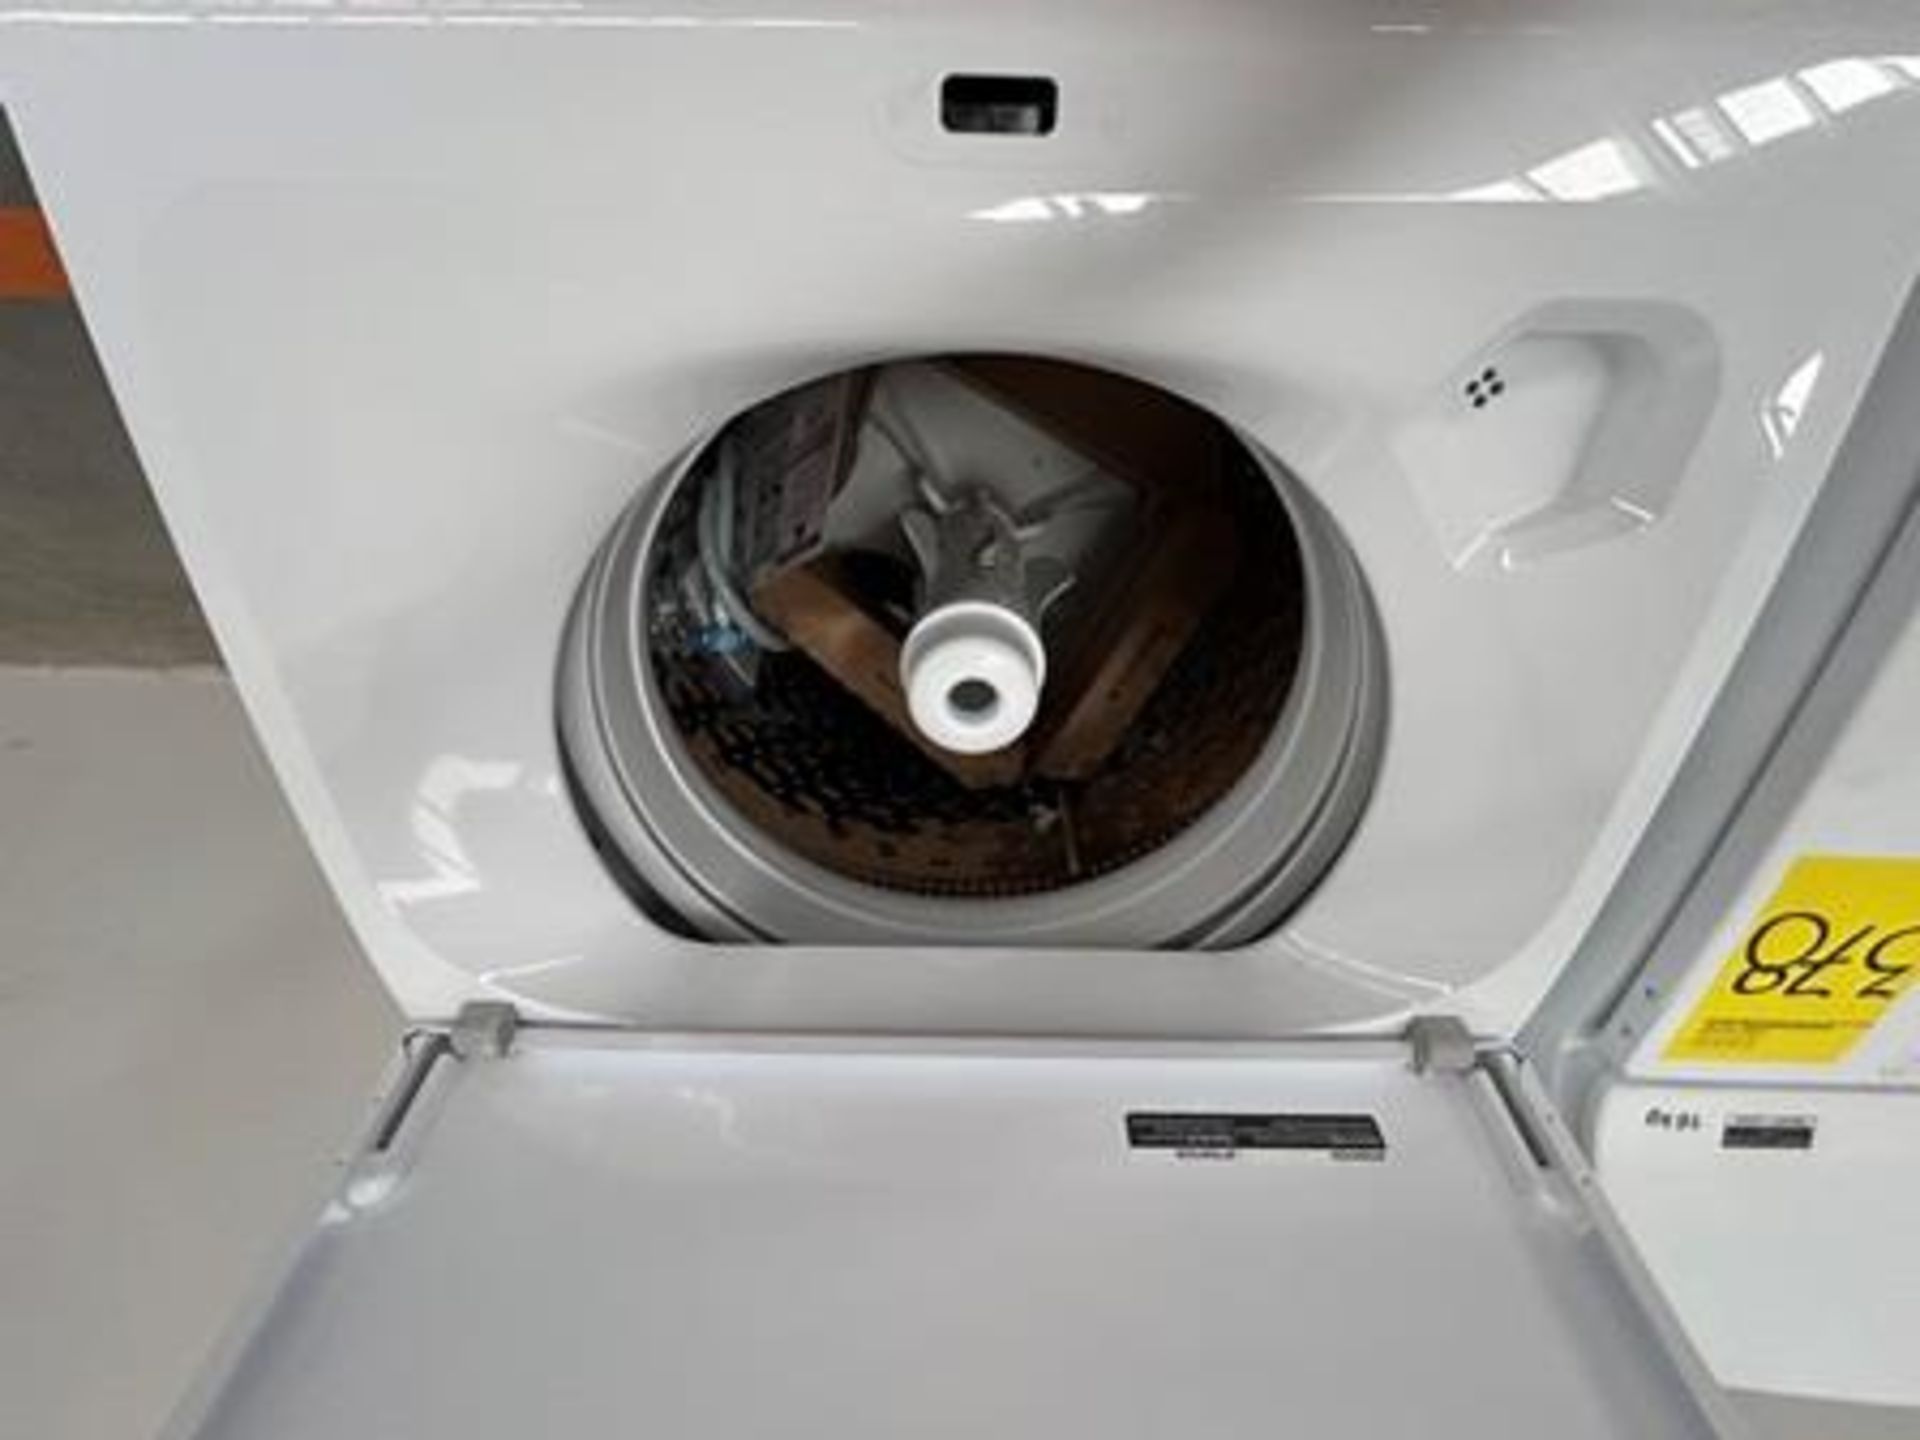 Lote de 2 lavadoras contiene: 1 Lavadora de 16 KG Marca WHIRPOOL, Modelo 8MWTW1612MJQ1, Serie 96973 - Image 4 of 11